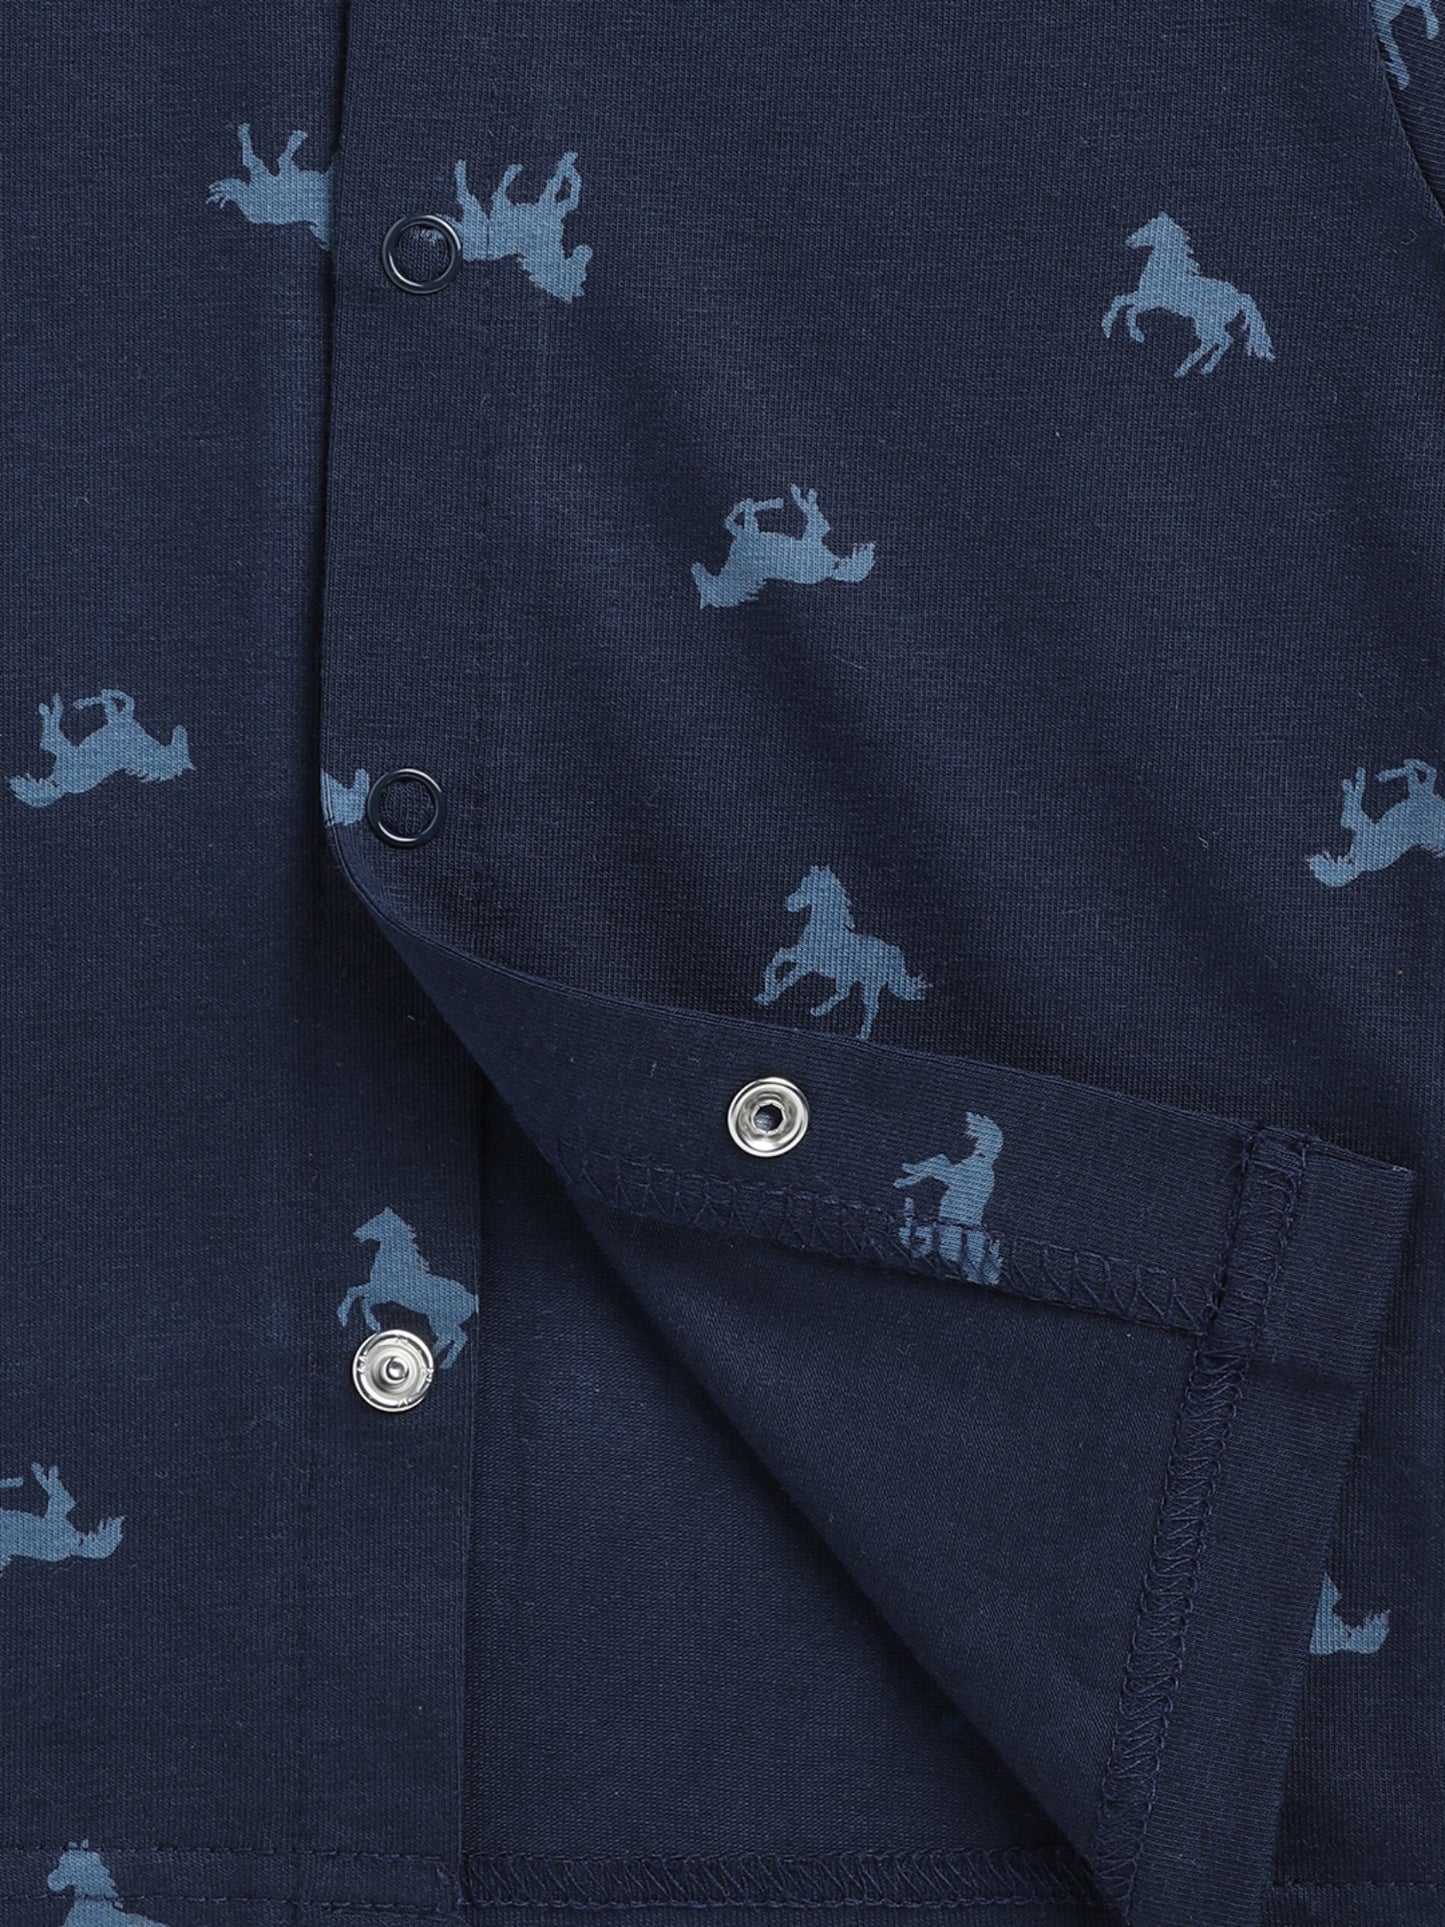 Horse Blue Cotton Full Sleeve Nightwear Set